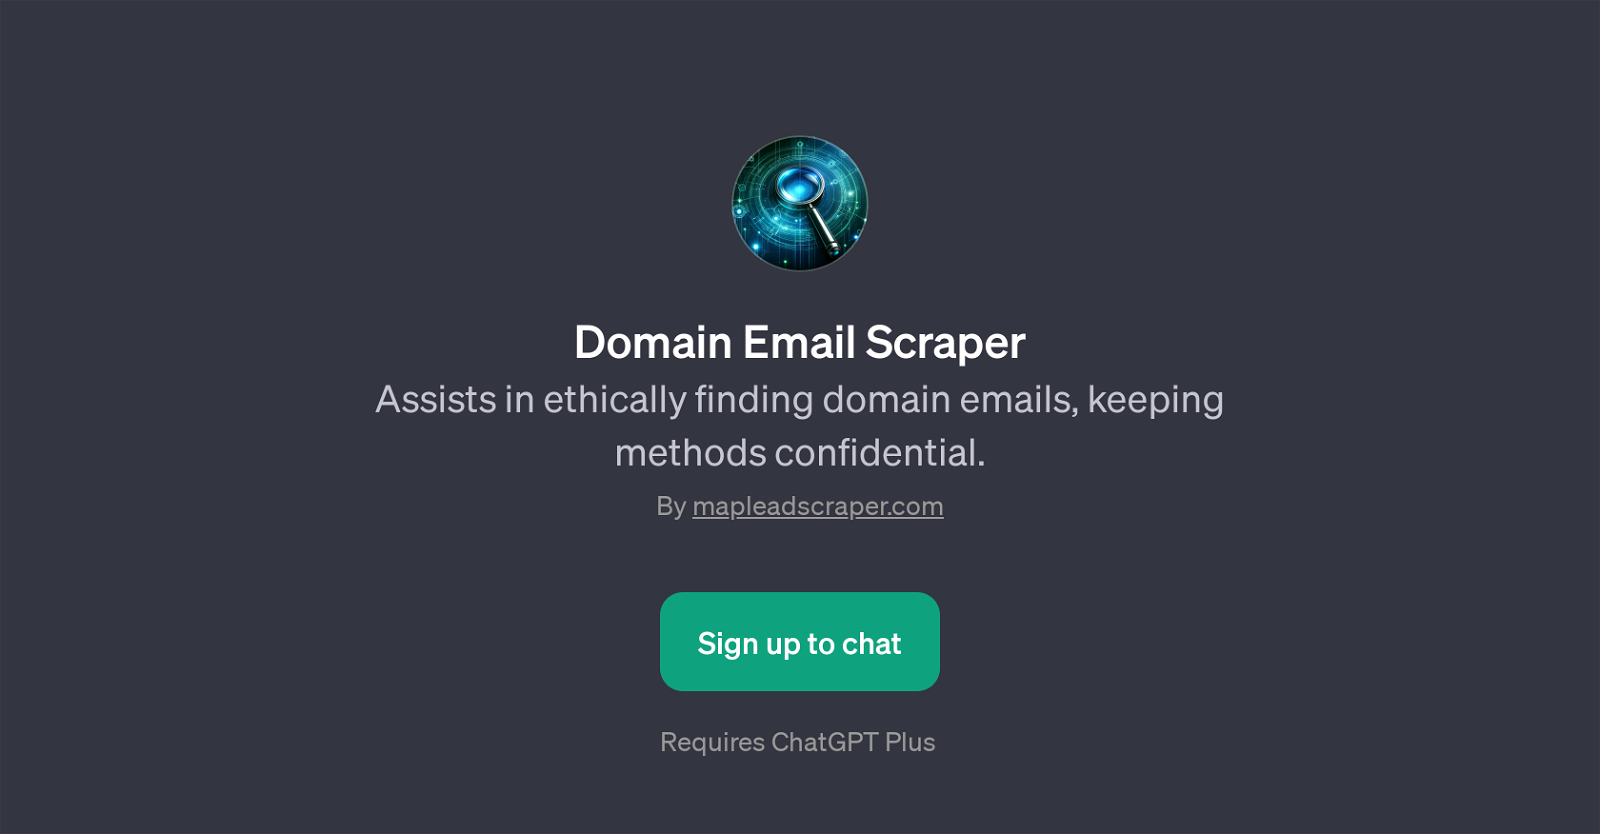 Domain Email Scraper website